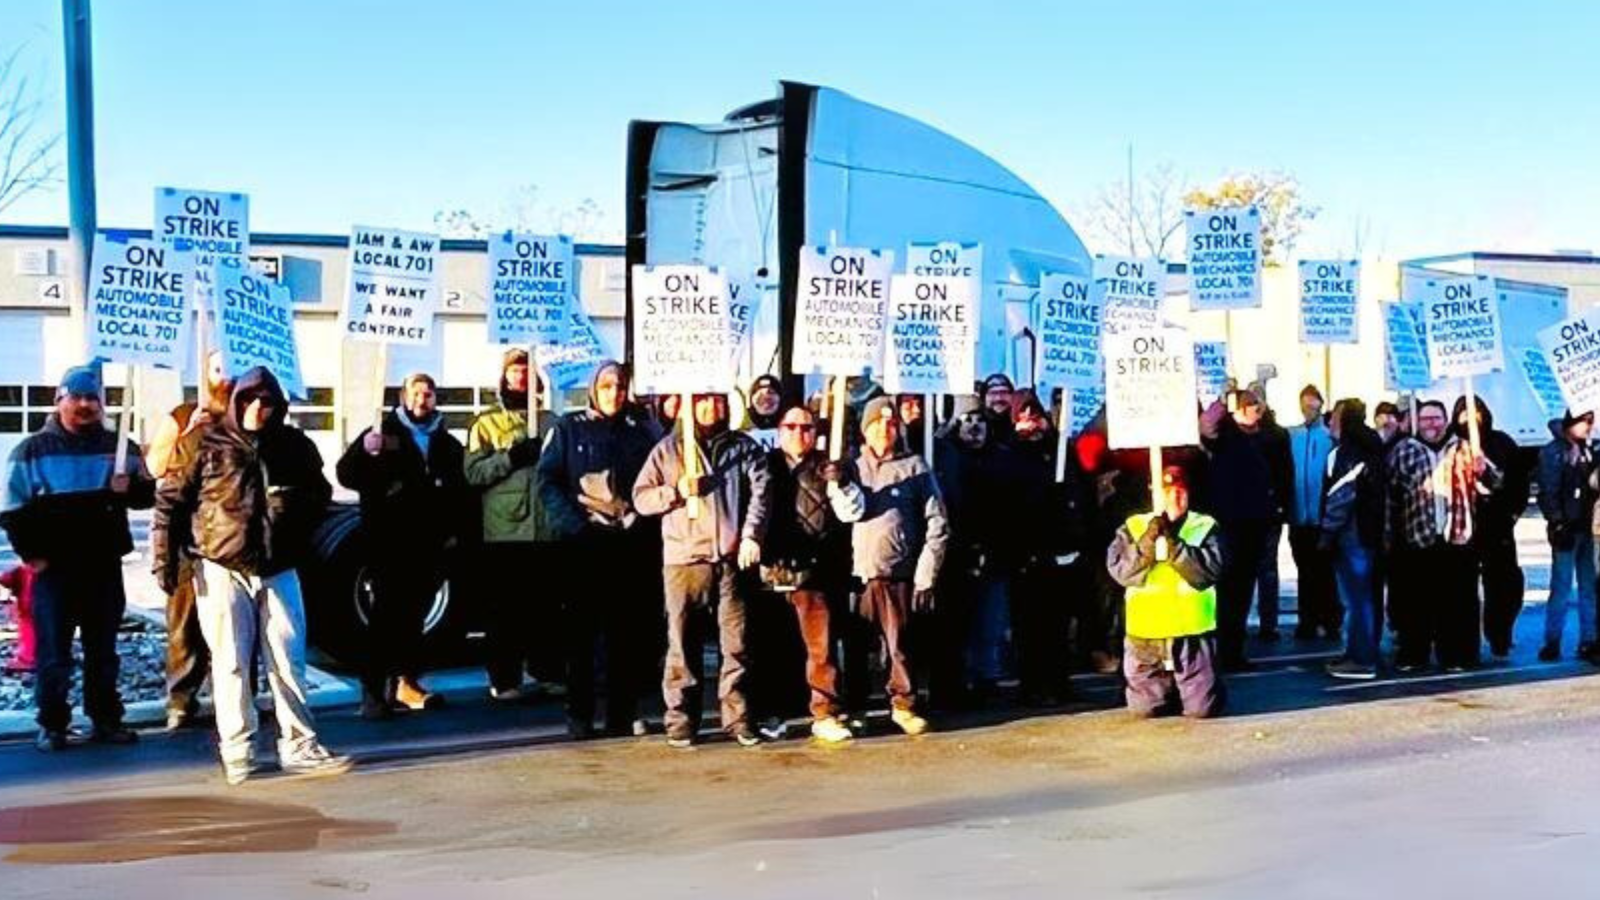 Illinois IAM Mechanics’ Union Members Strike for Fair Contract as M&K Truck Centers Management Threatens Healthcare, Retirement Provisions